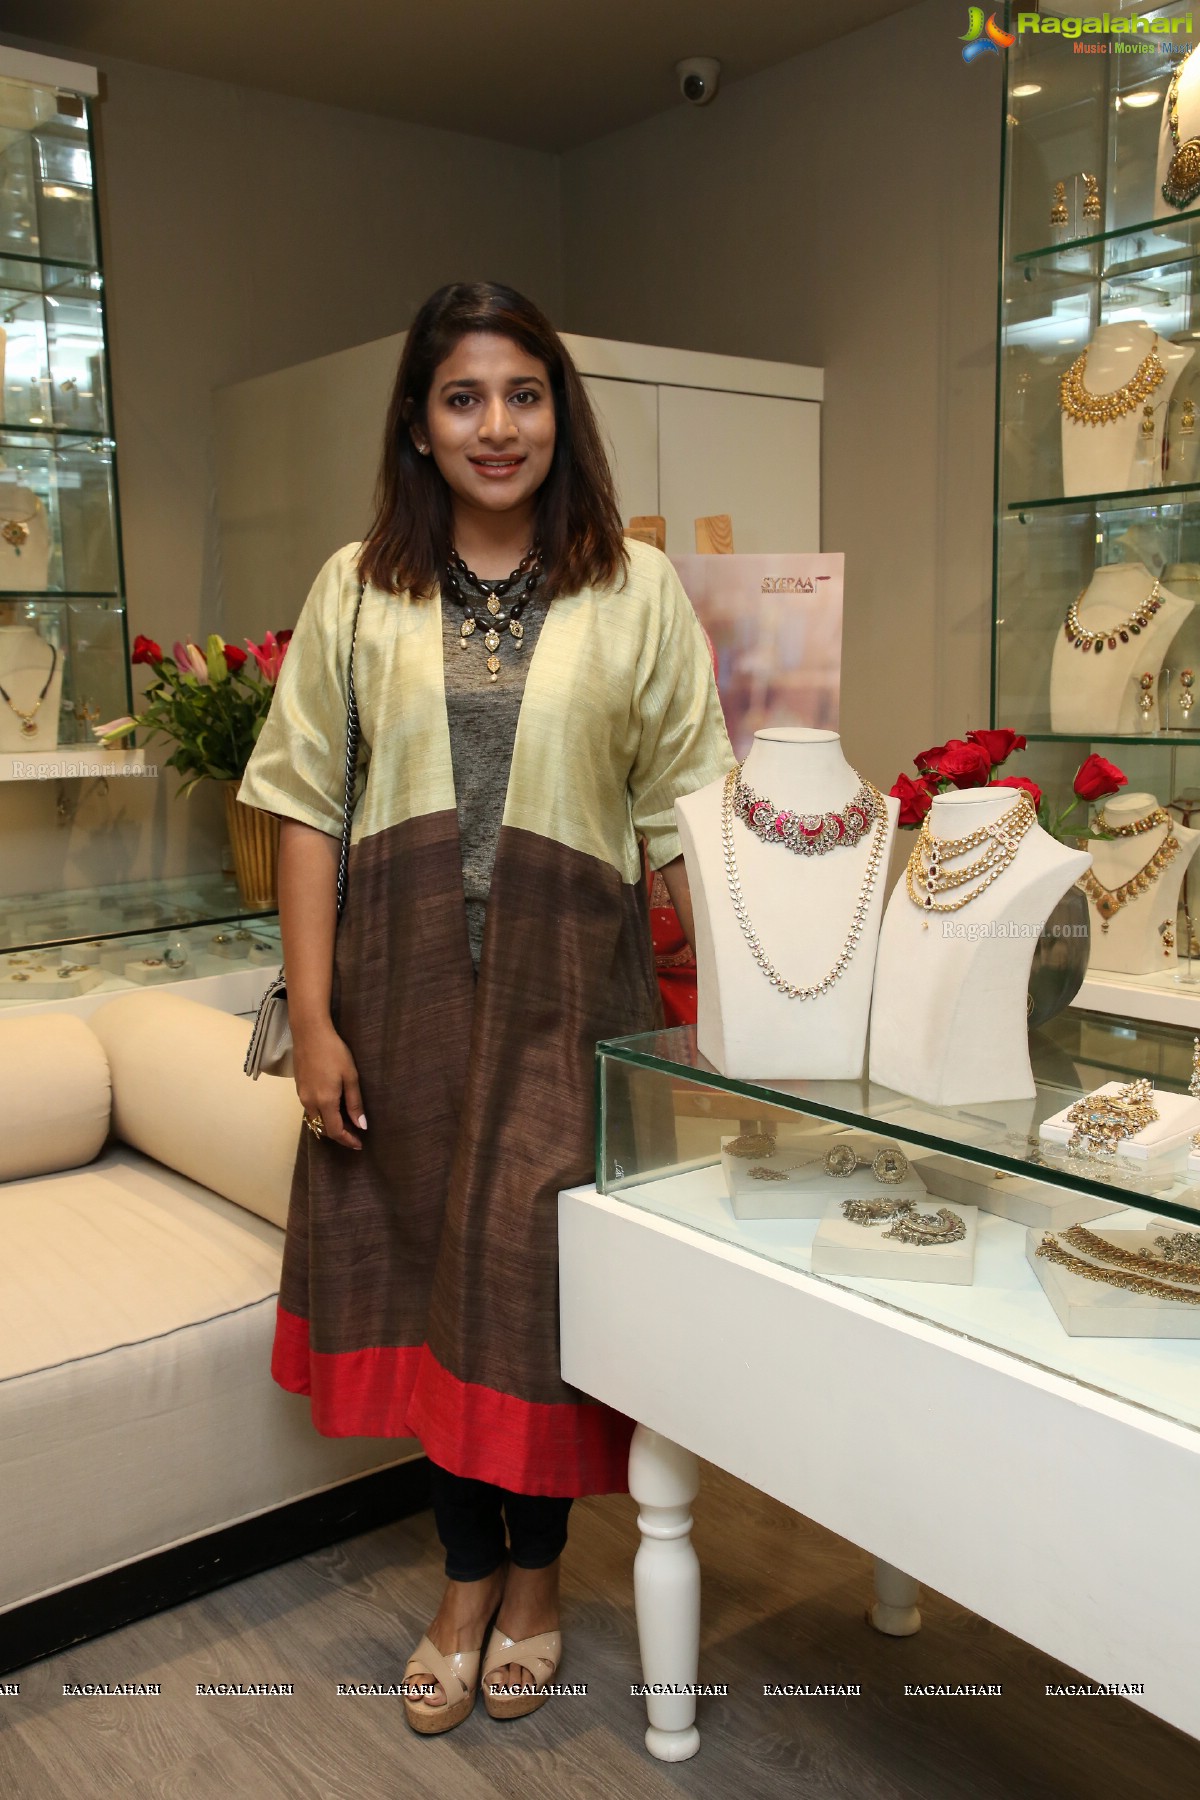 Amrapali's Jewellery Collection for SyeRaa Narsasimha Reddy Movie